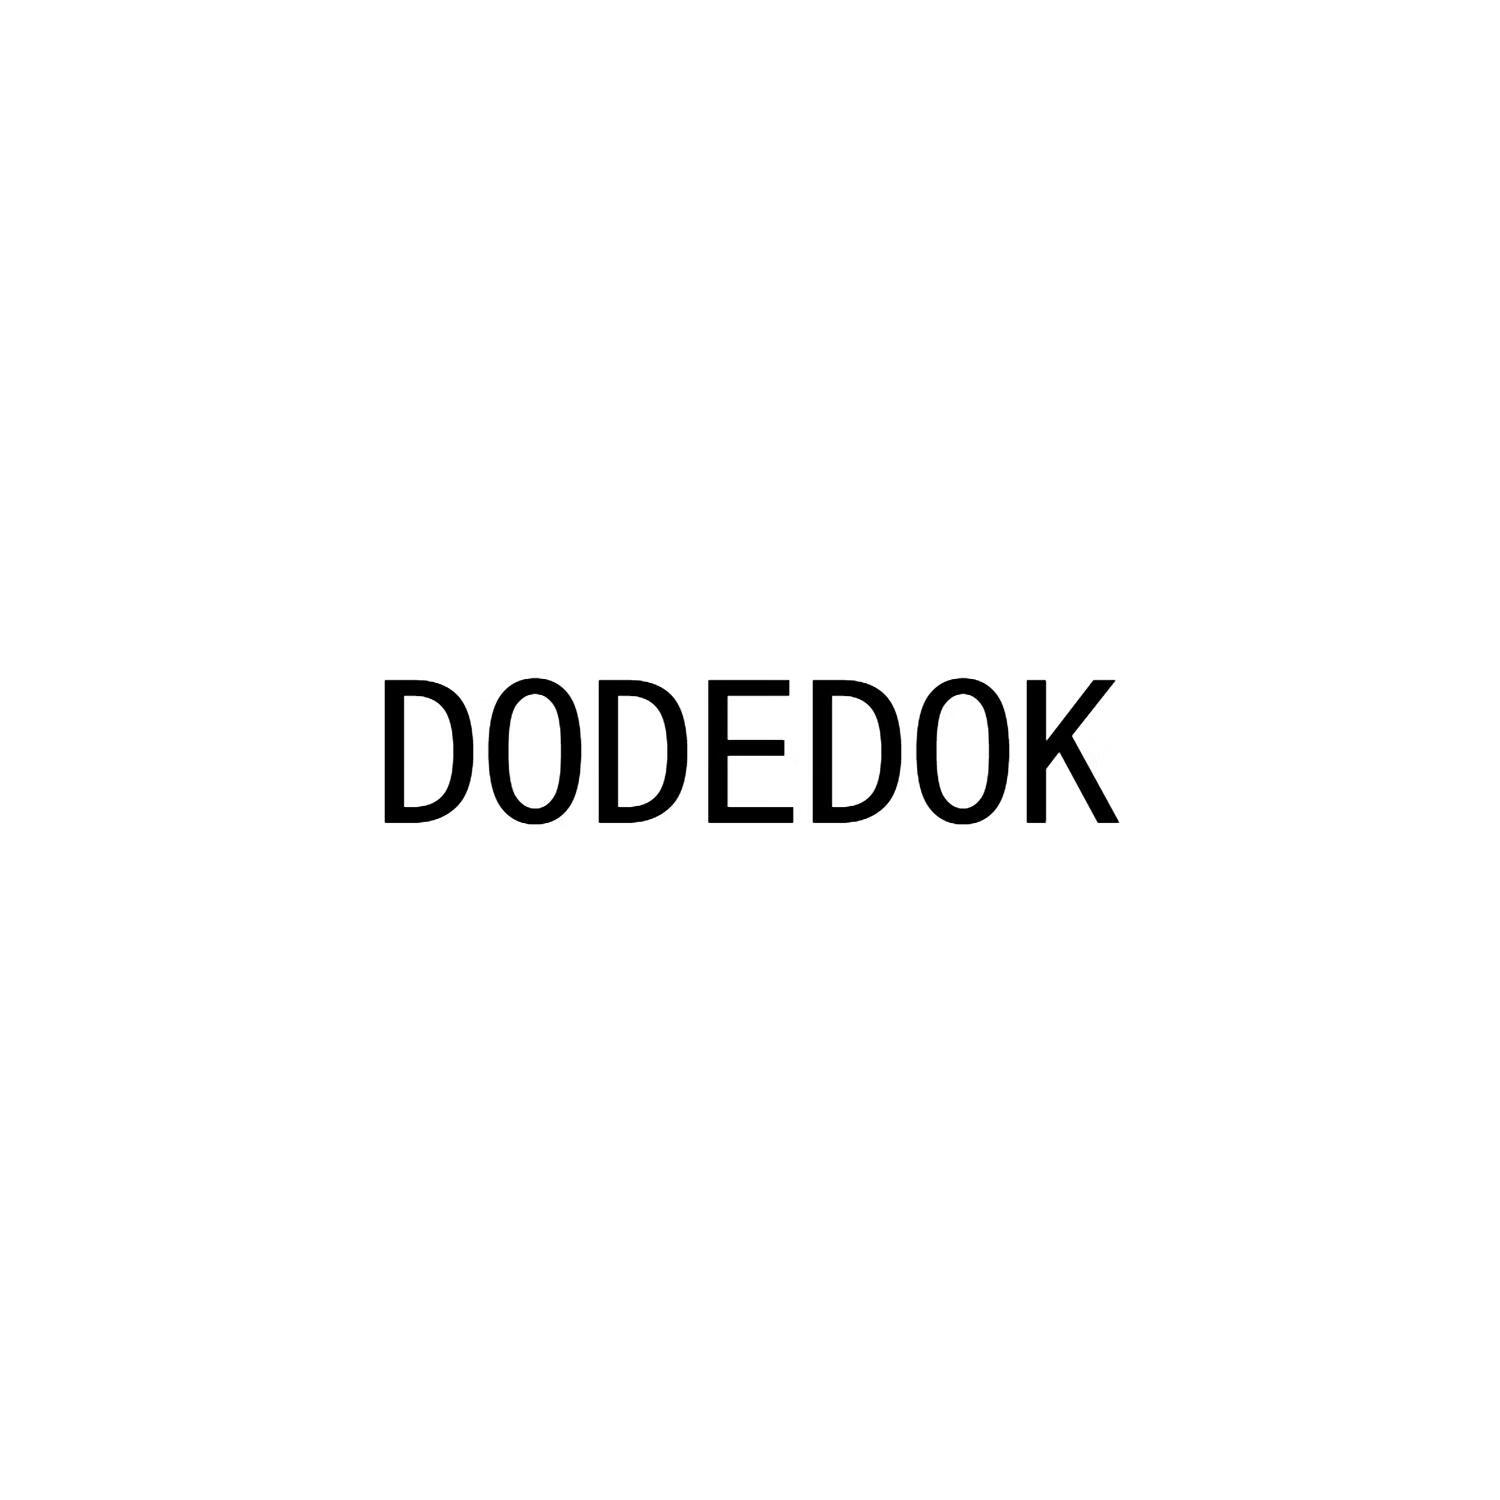 DODEDOK